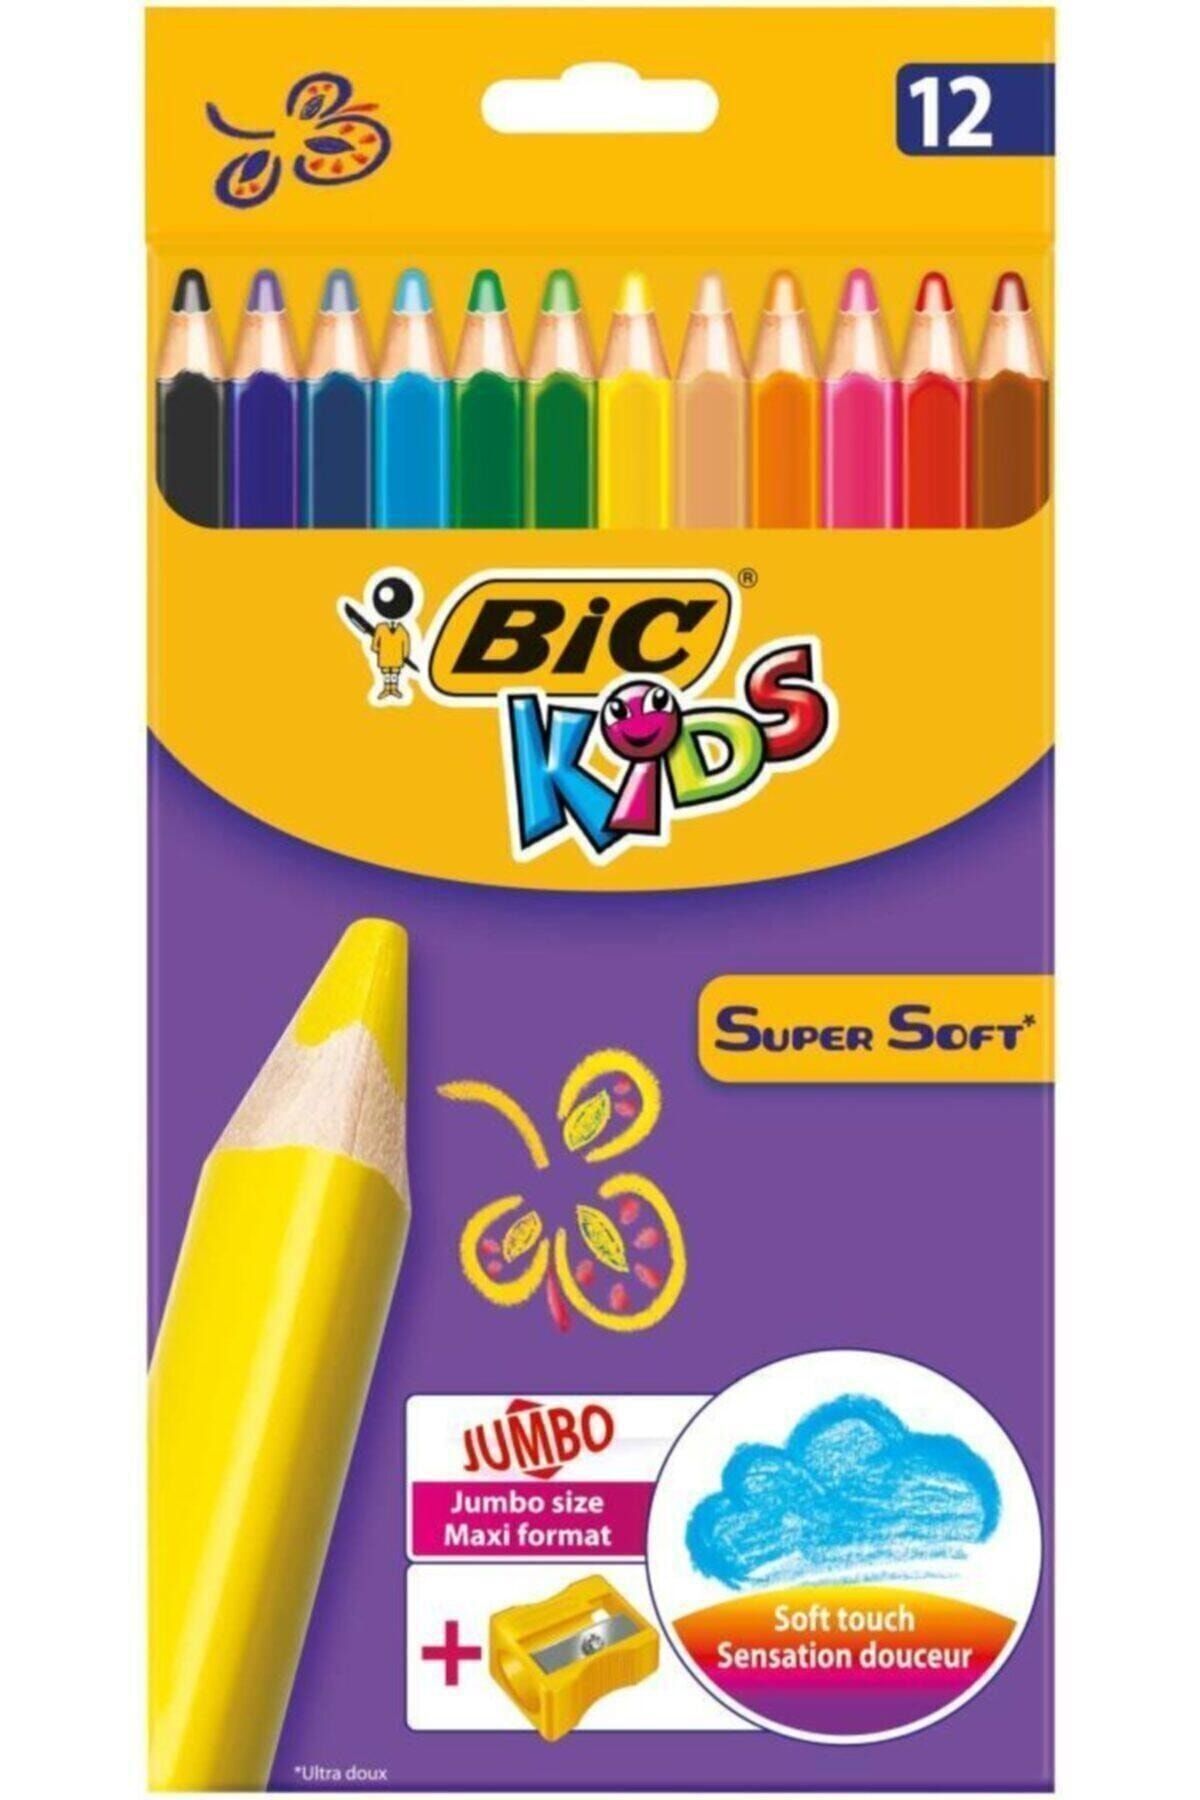 Bic بچه گانه سوپر سافت نرم خشک مداد رنگی 12 رنگ جامبو تراش 07.11.029.035